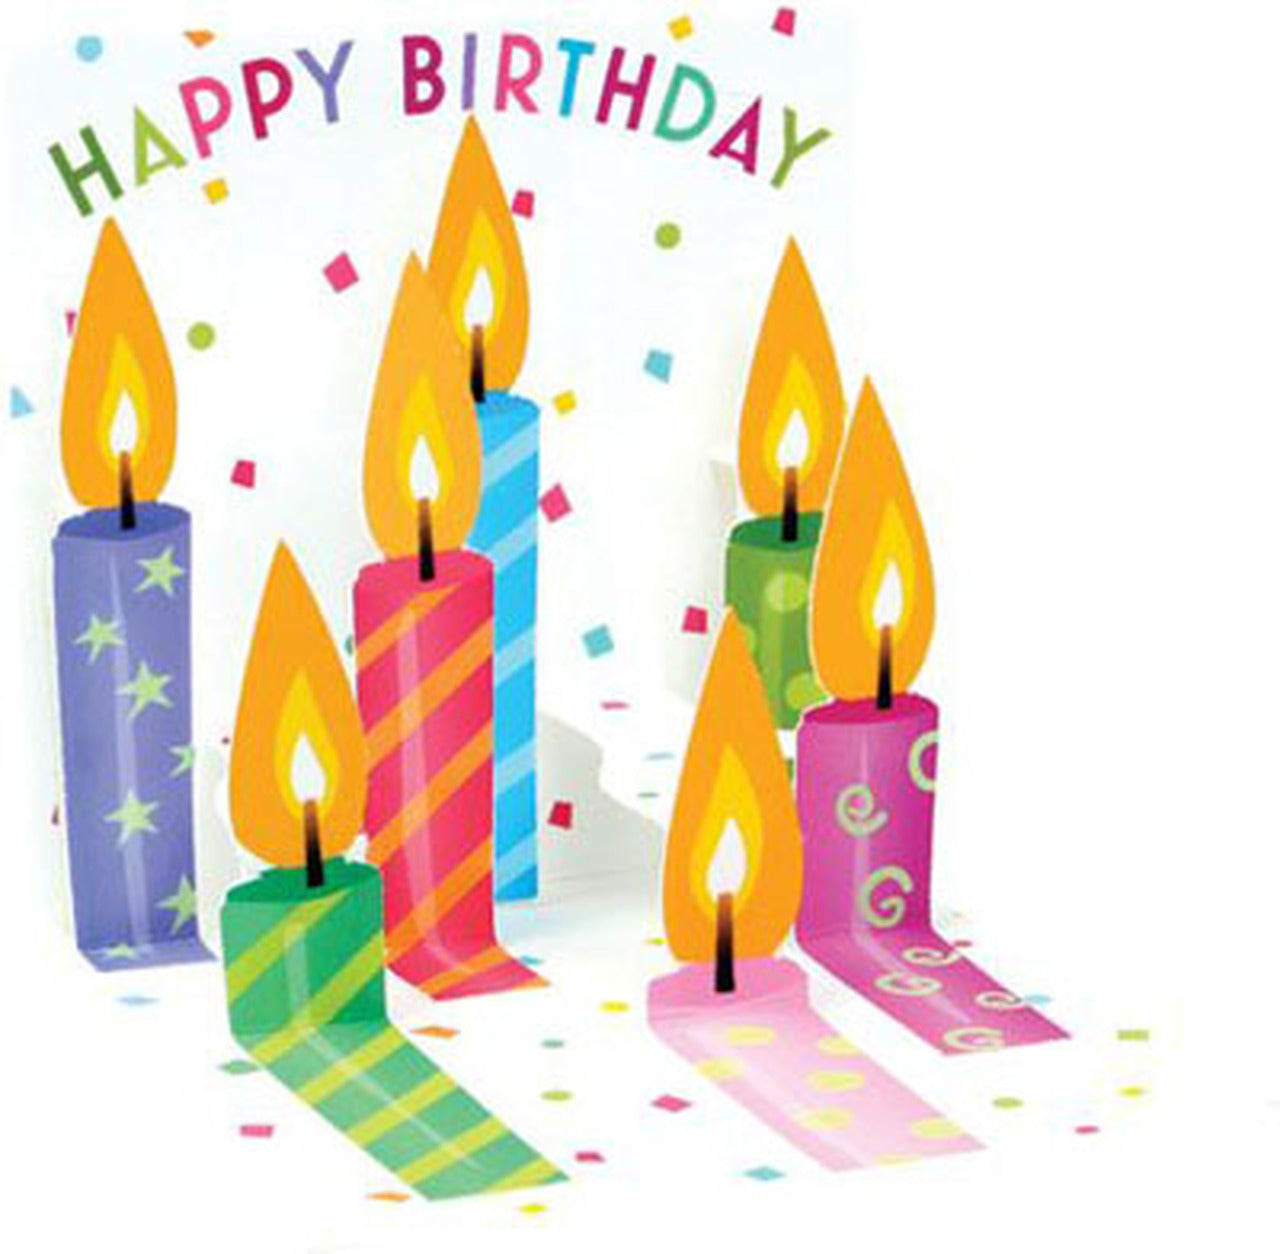 Birthday Candles Mini Pop-Up Card